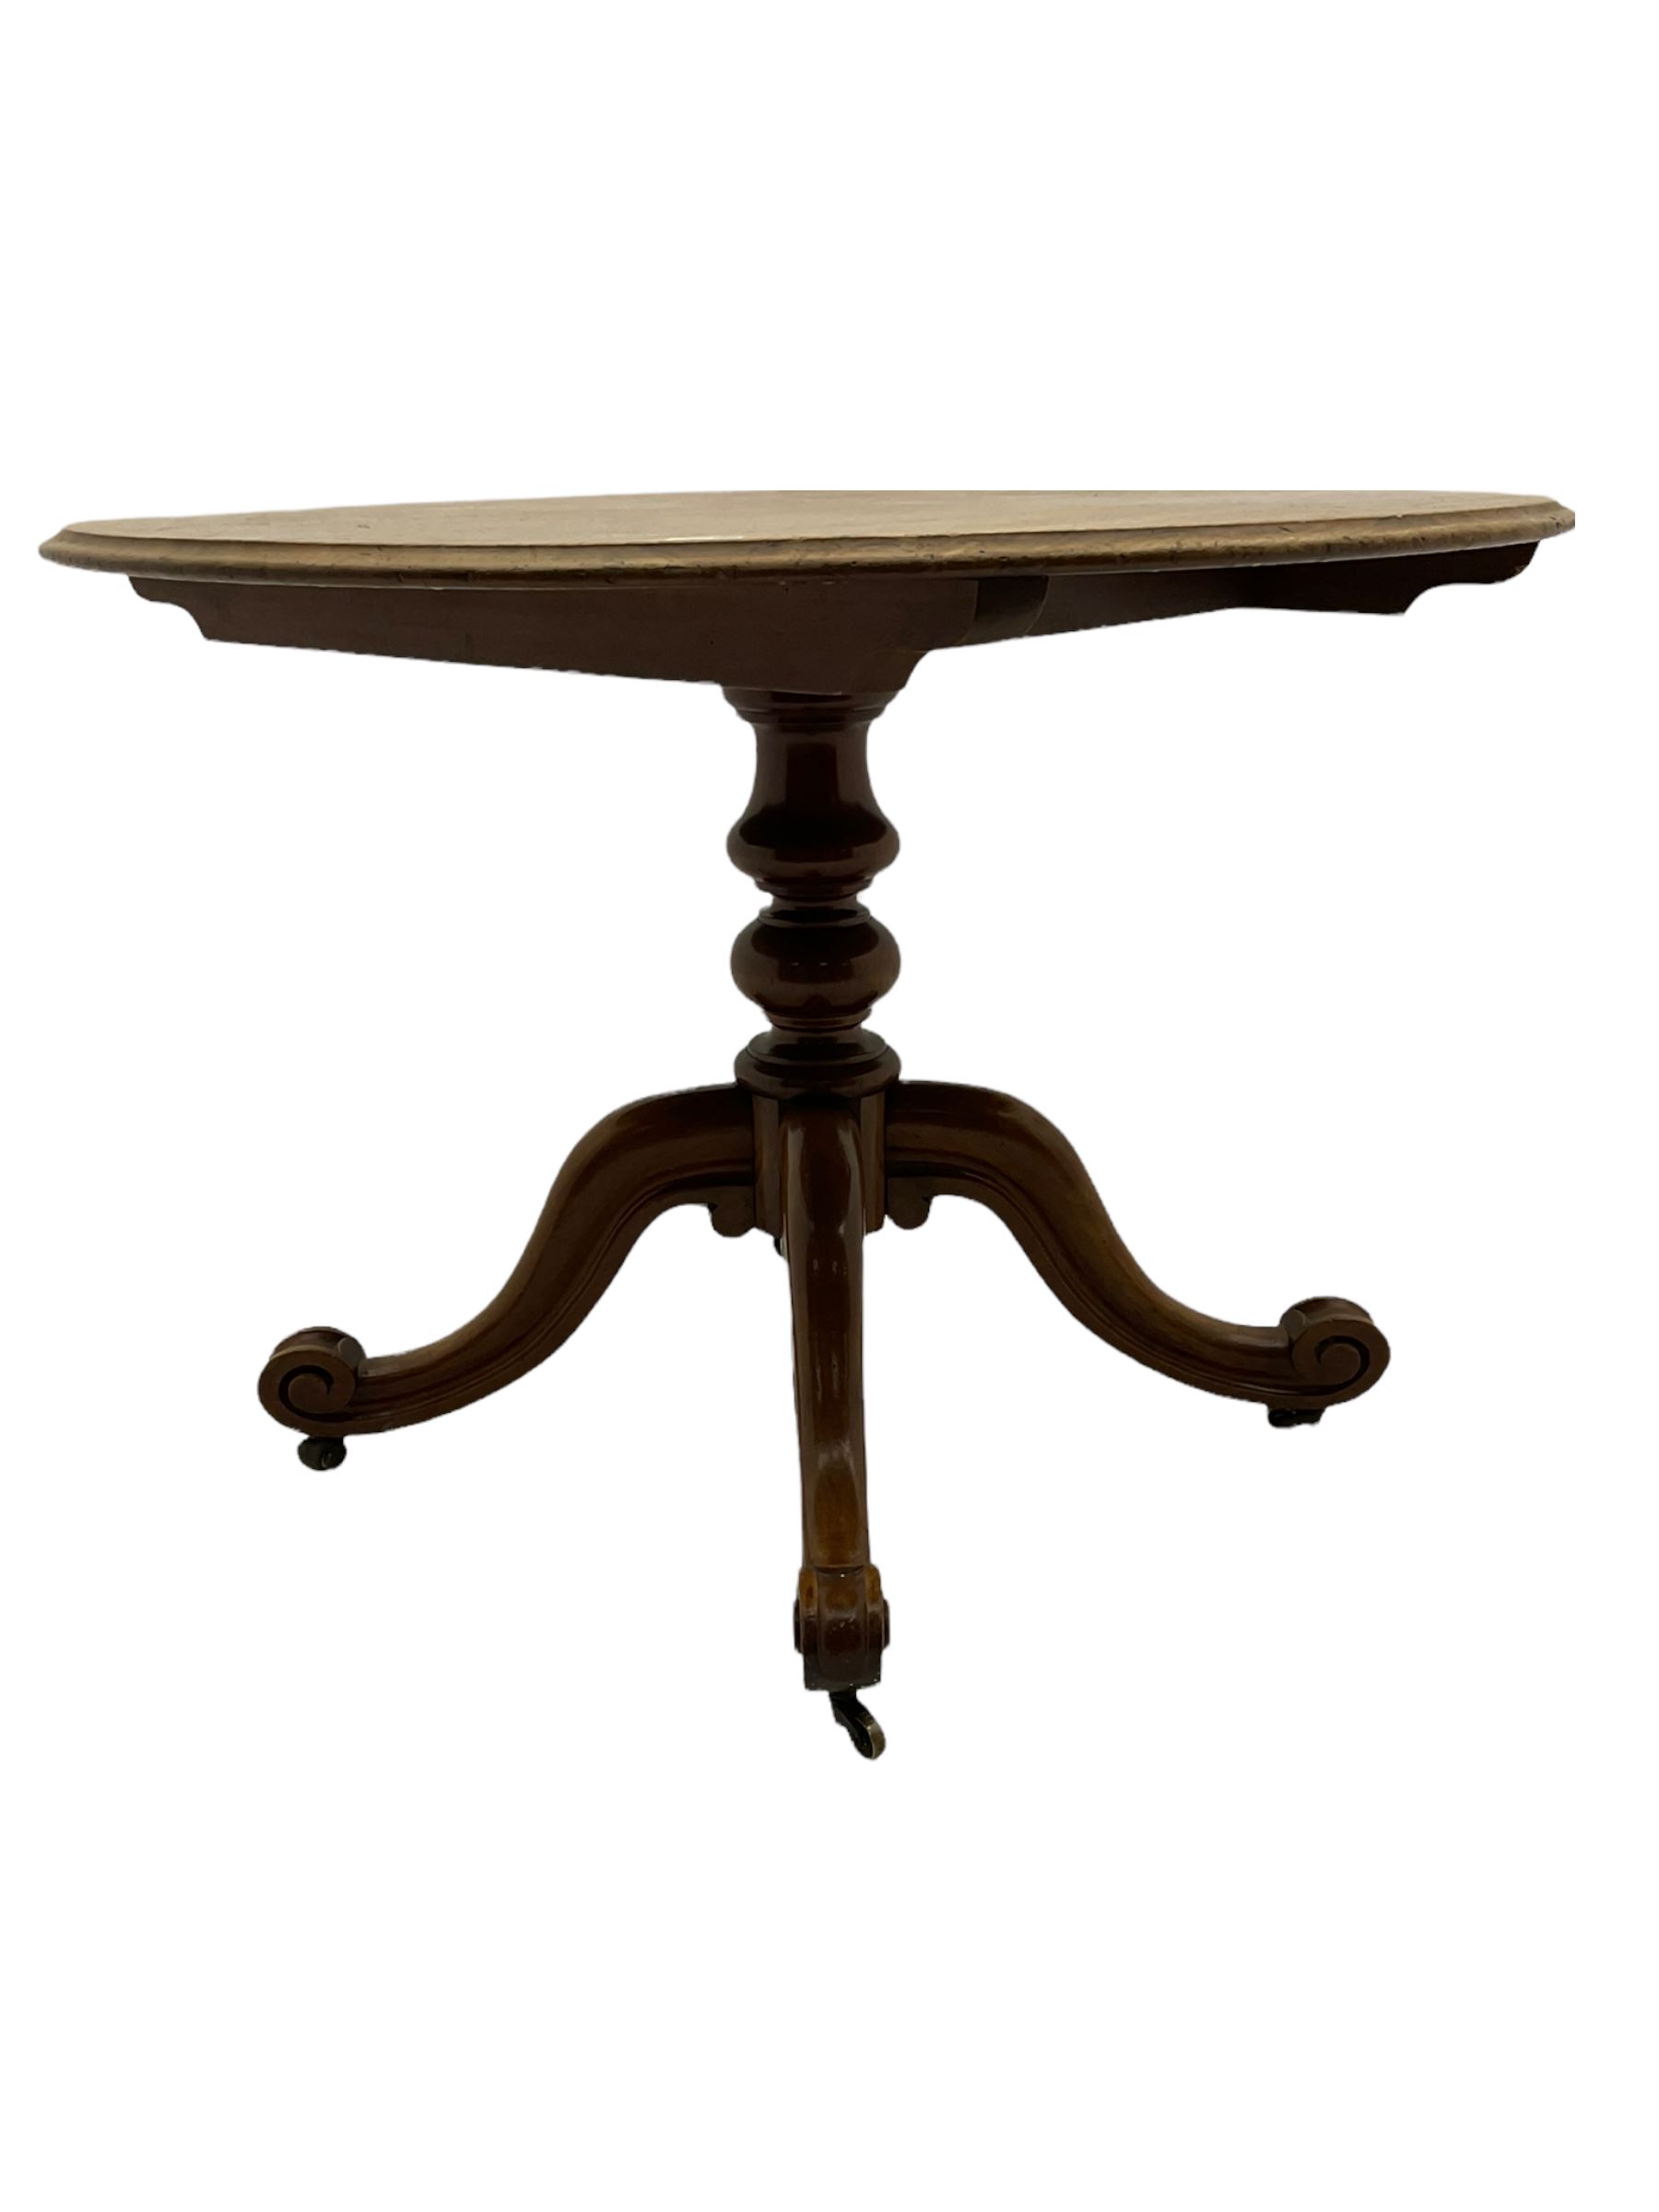 Victorian mahogany circular centre table